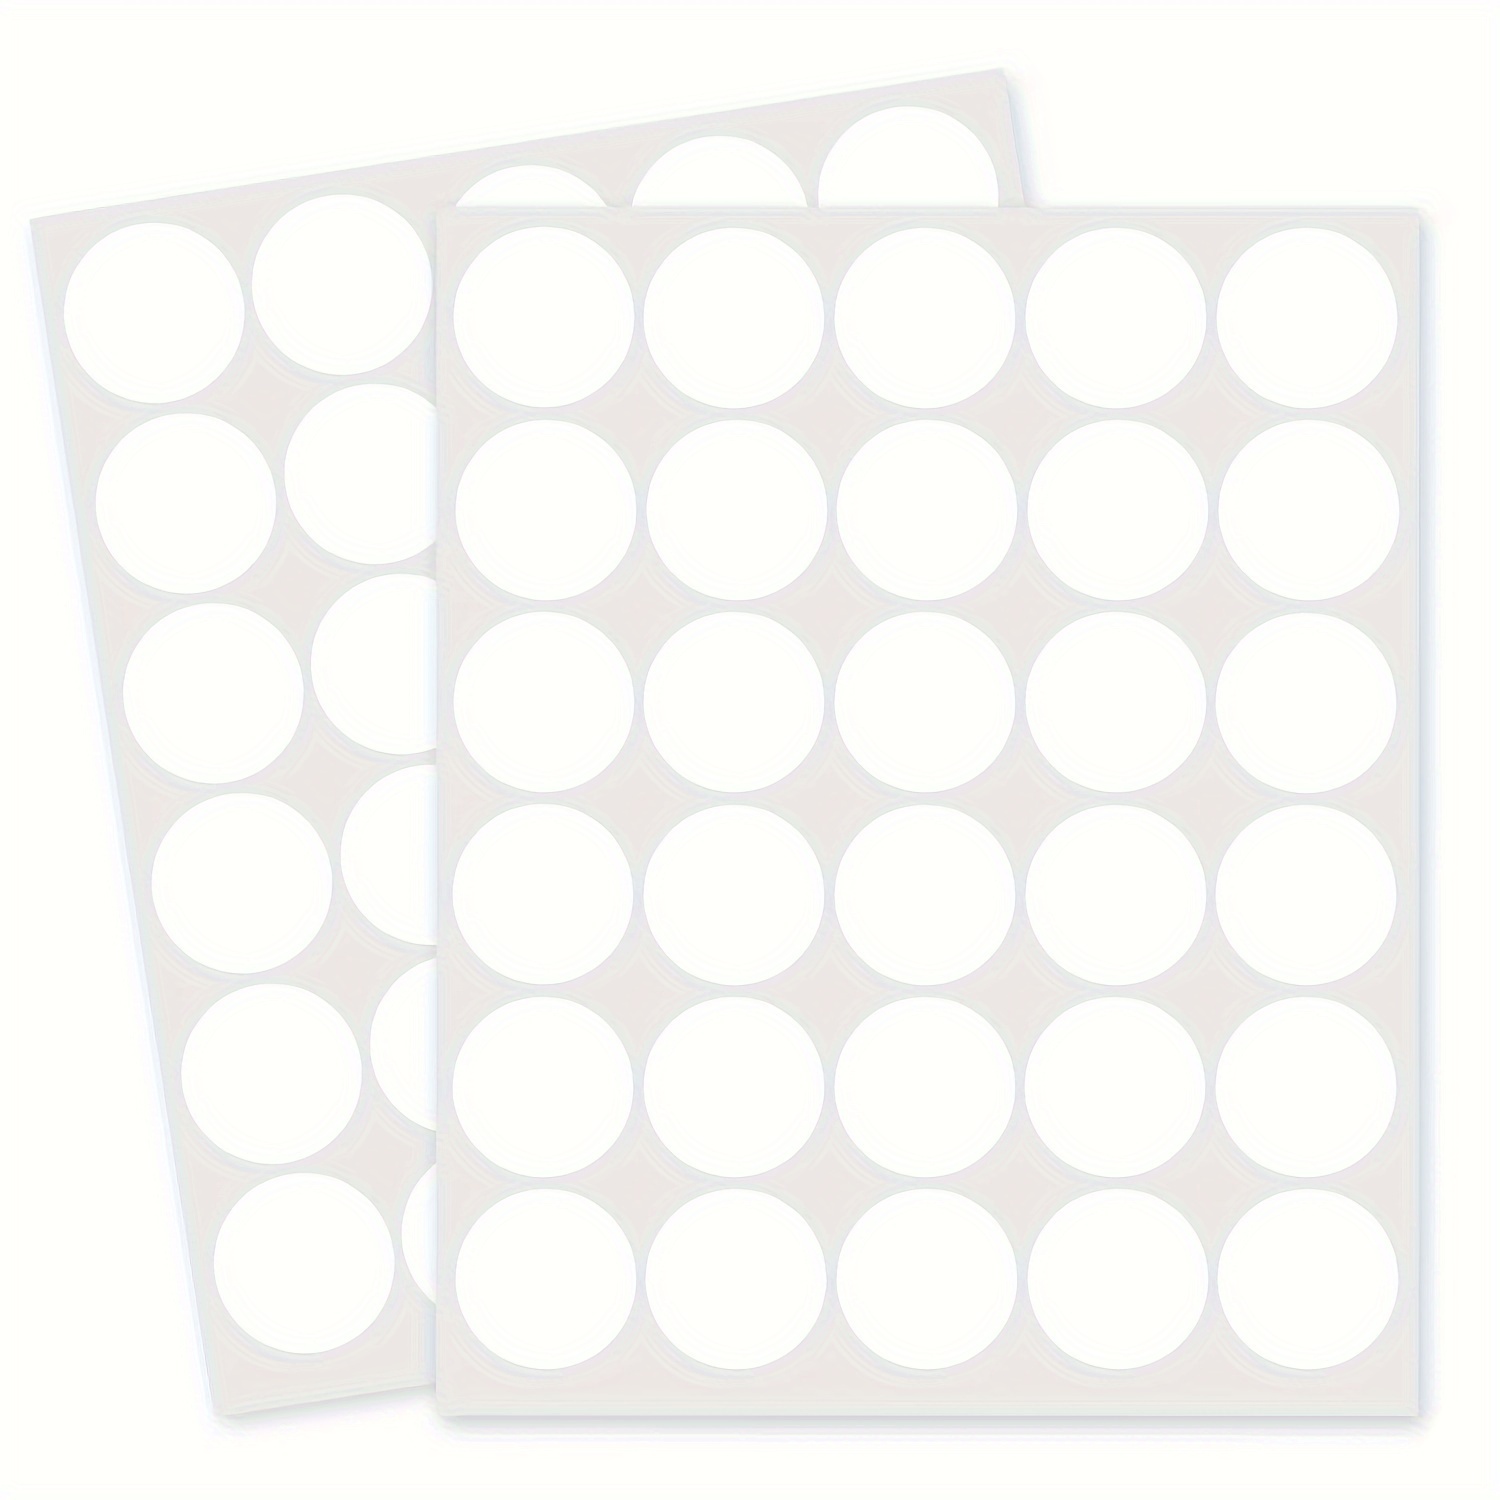 Teeny Tiny Dot Stickers, Circle Planner Stickers, Dot, Bullet Point, Small,  Little, Mini, Minimal, Light, Dark, Gray, Brown, Cozy Neutrals 